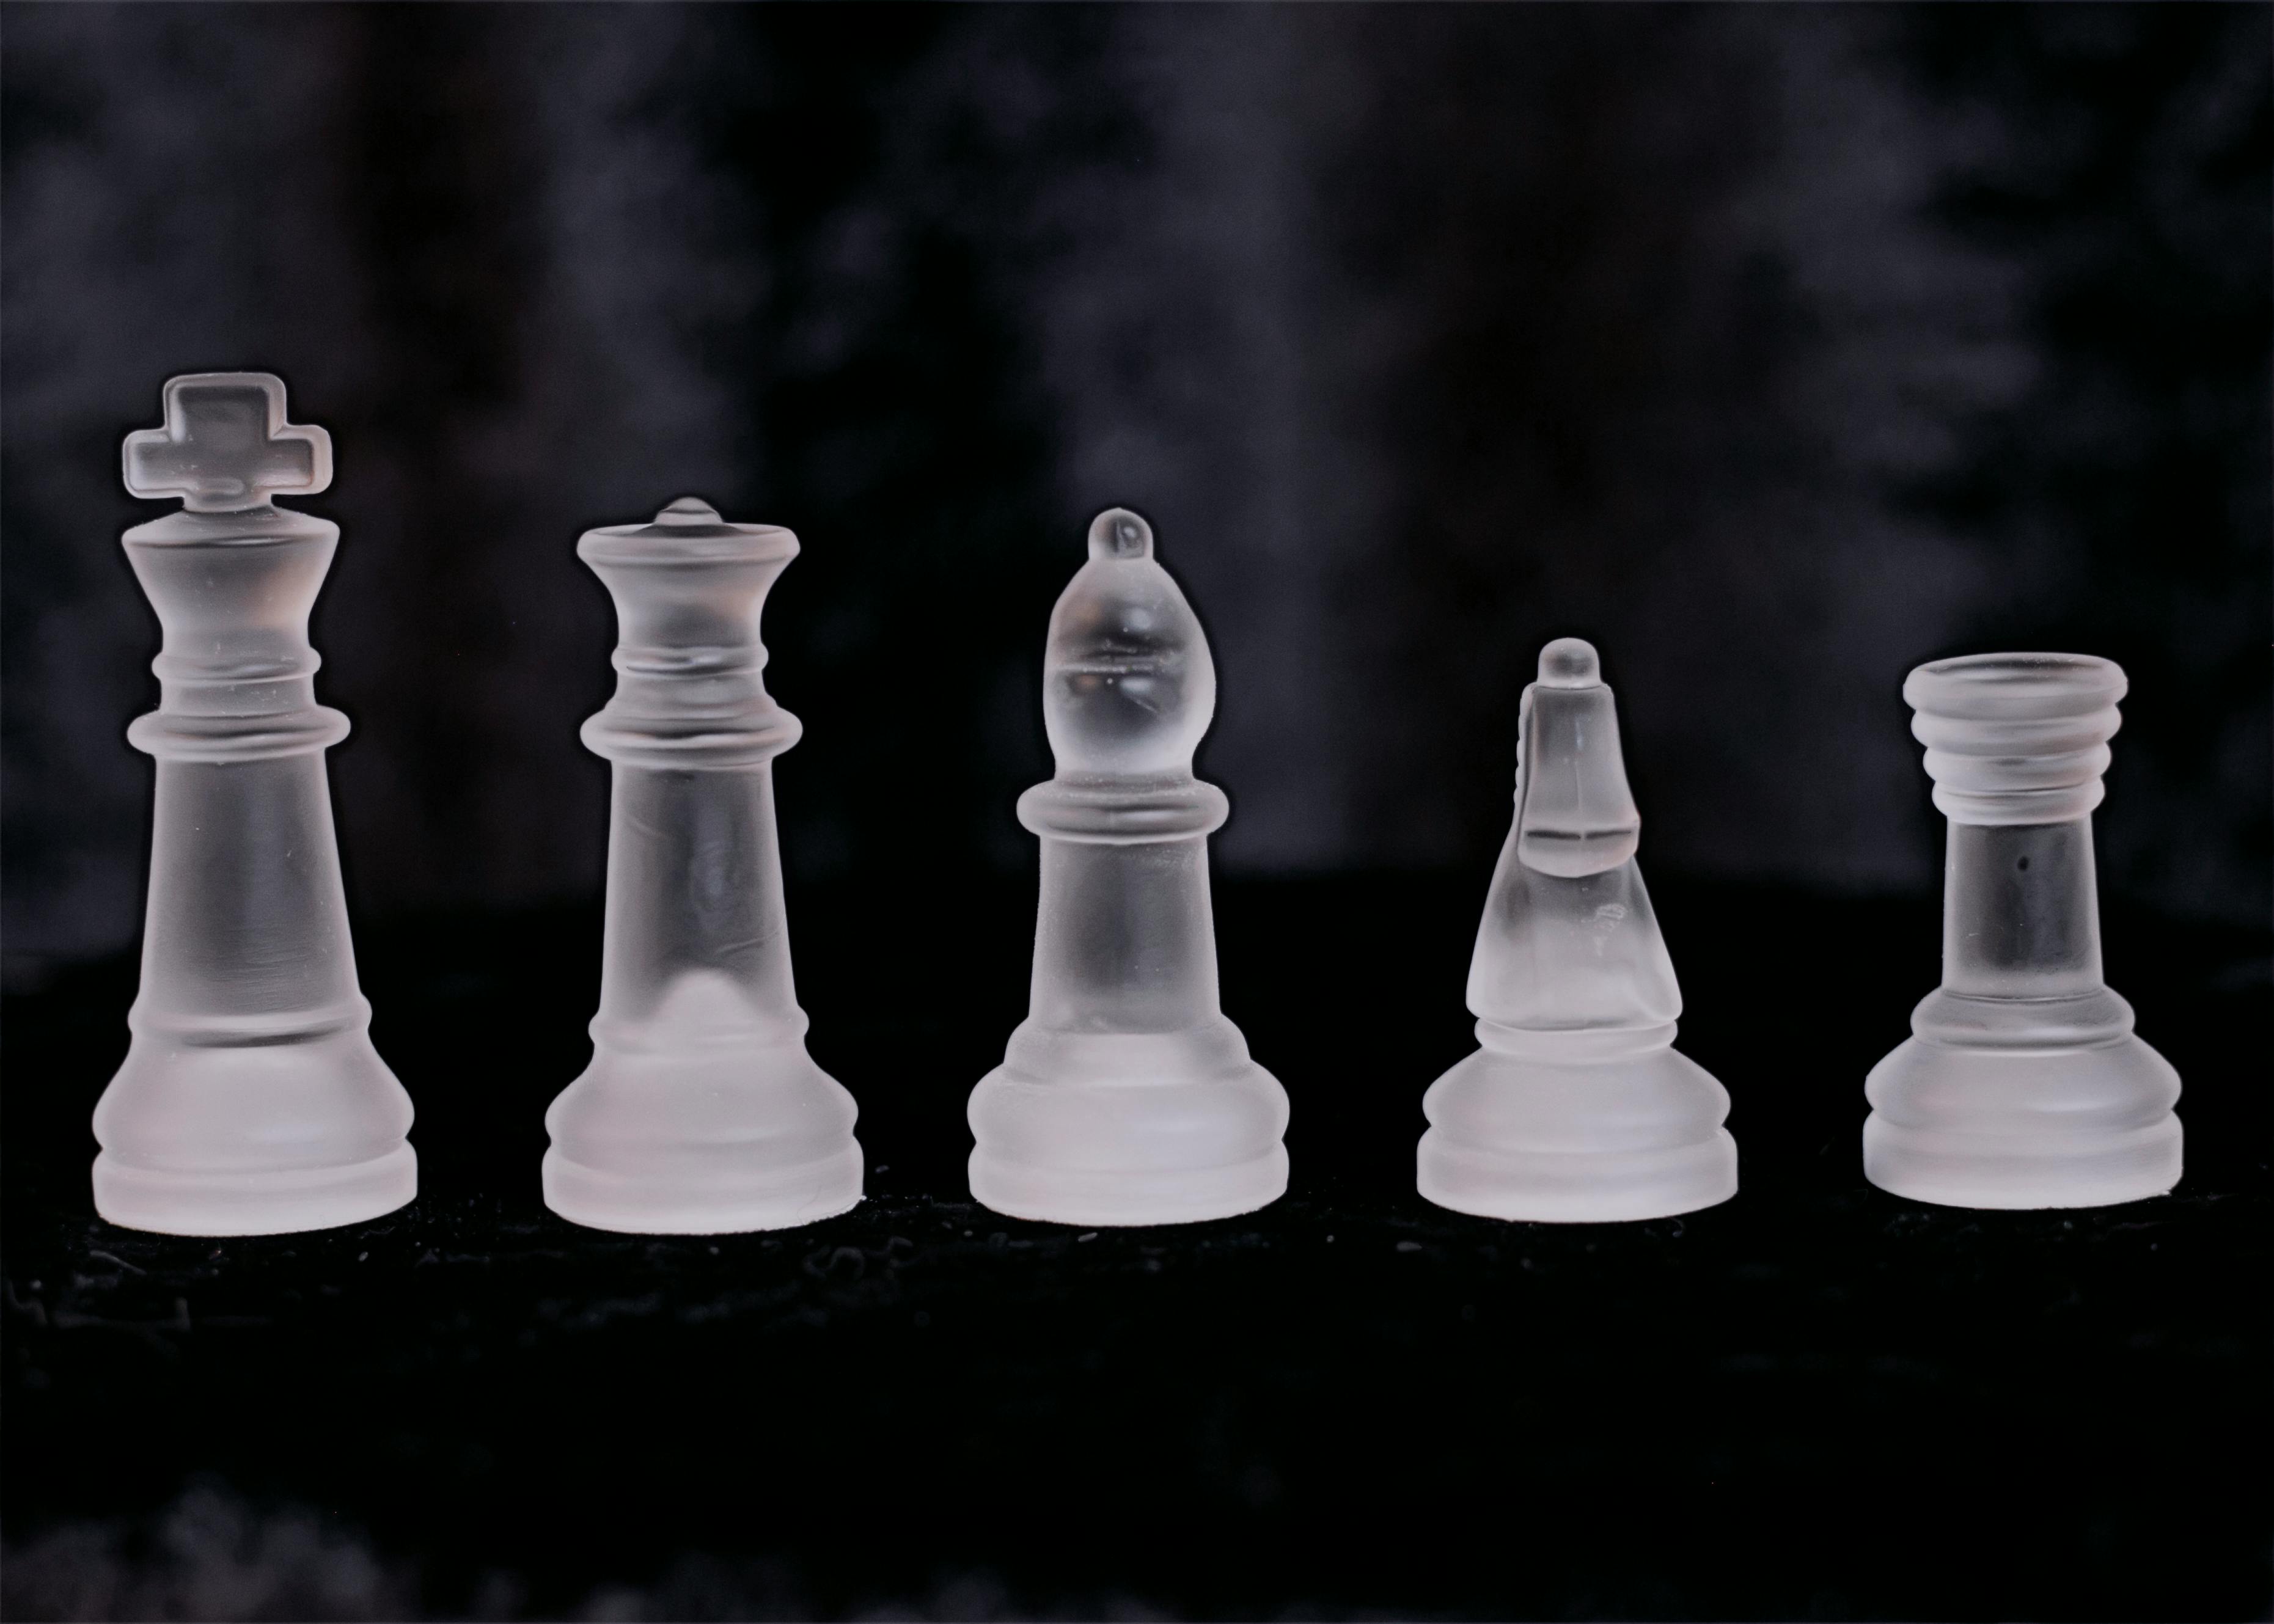 Free stock photo of chess